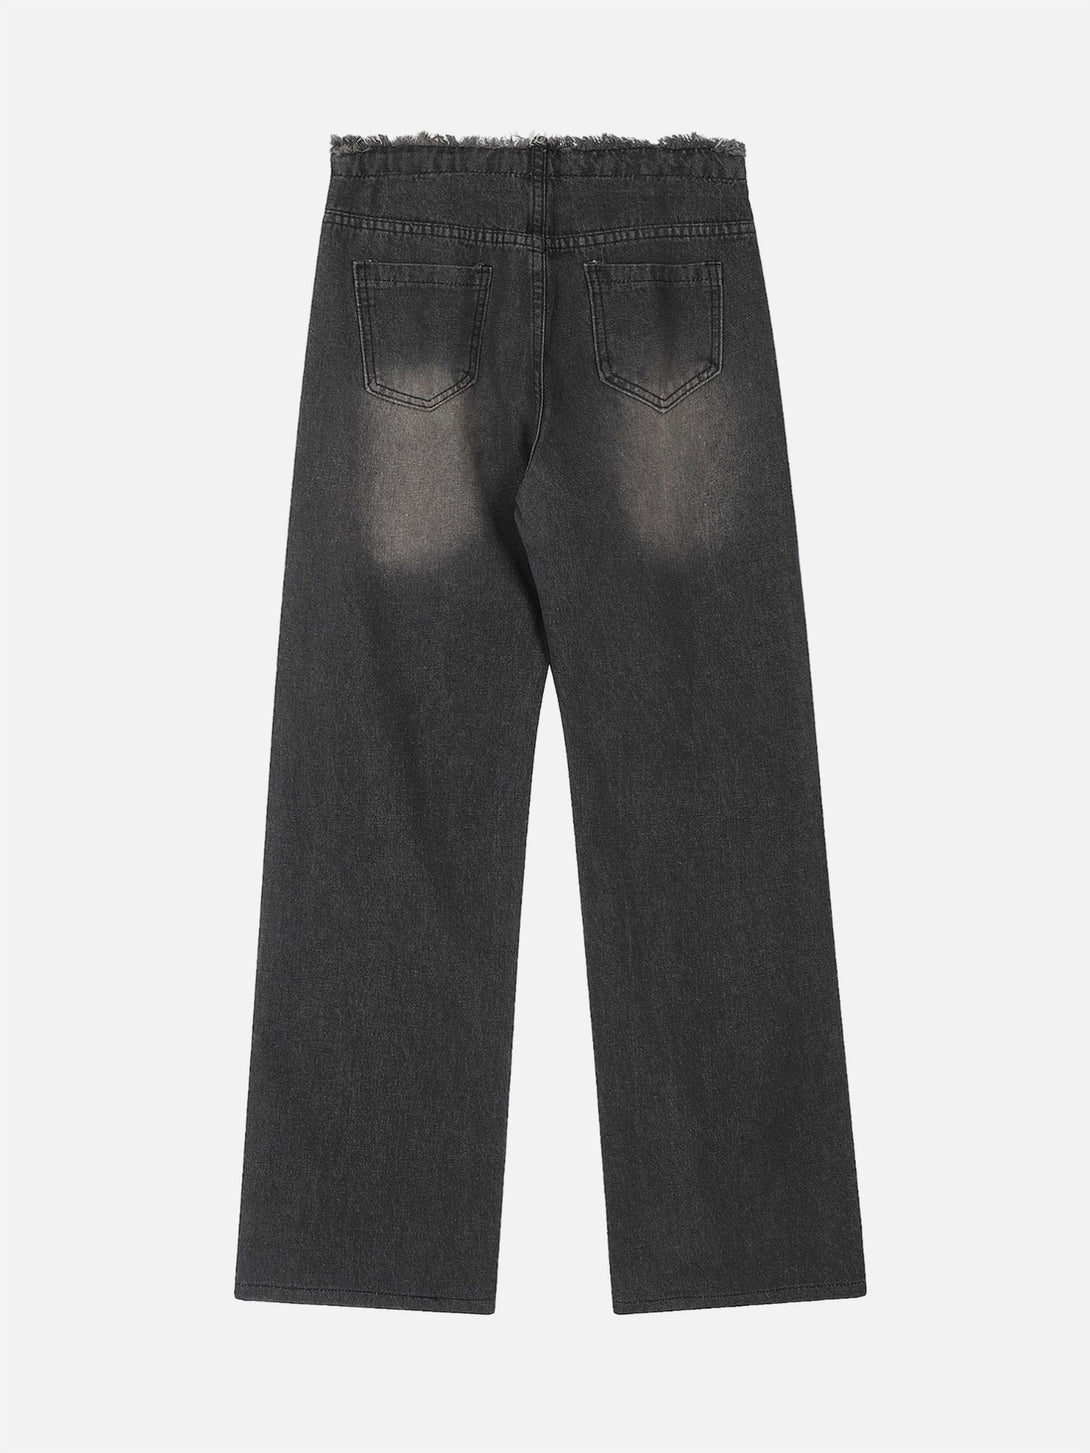 Majesda® - High Street Distressed Washed Distressed Drawstring Jeans- Outfit Ideas - Streetwear Fashion - majesda.com